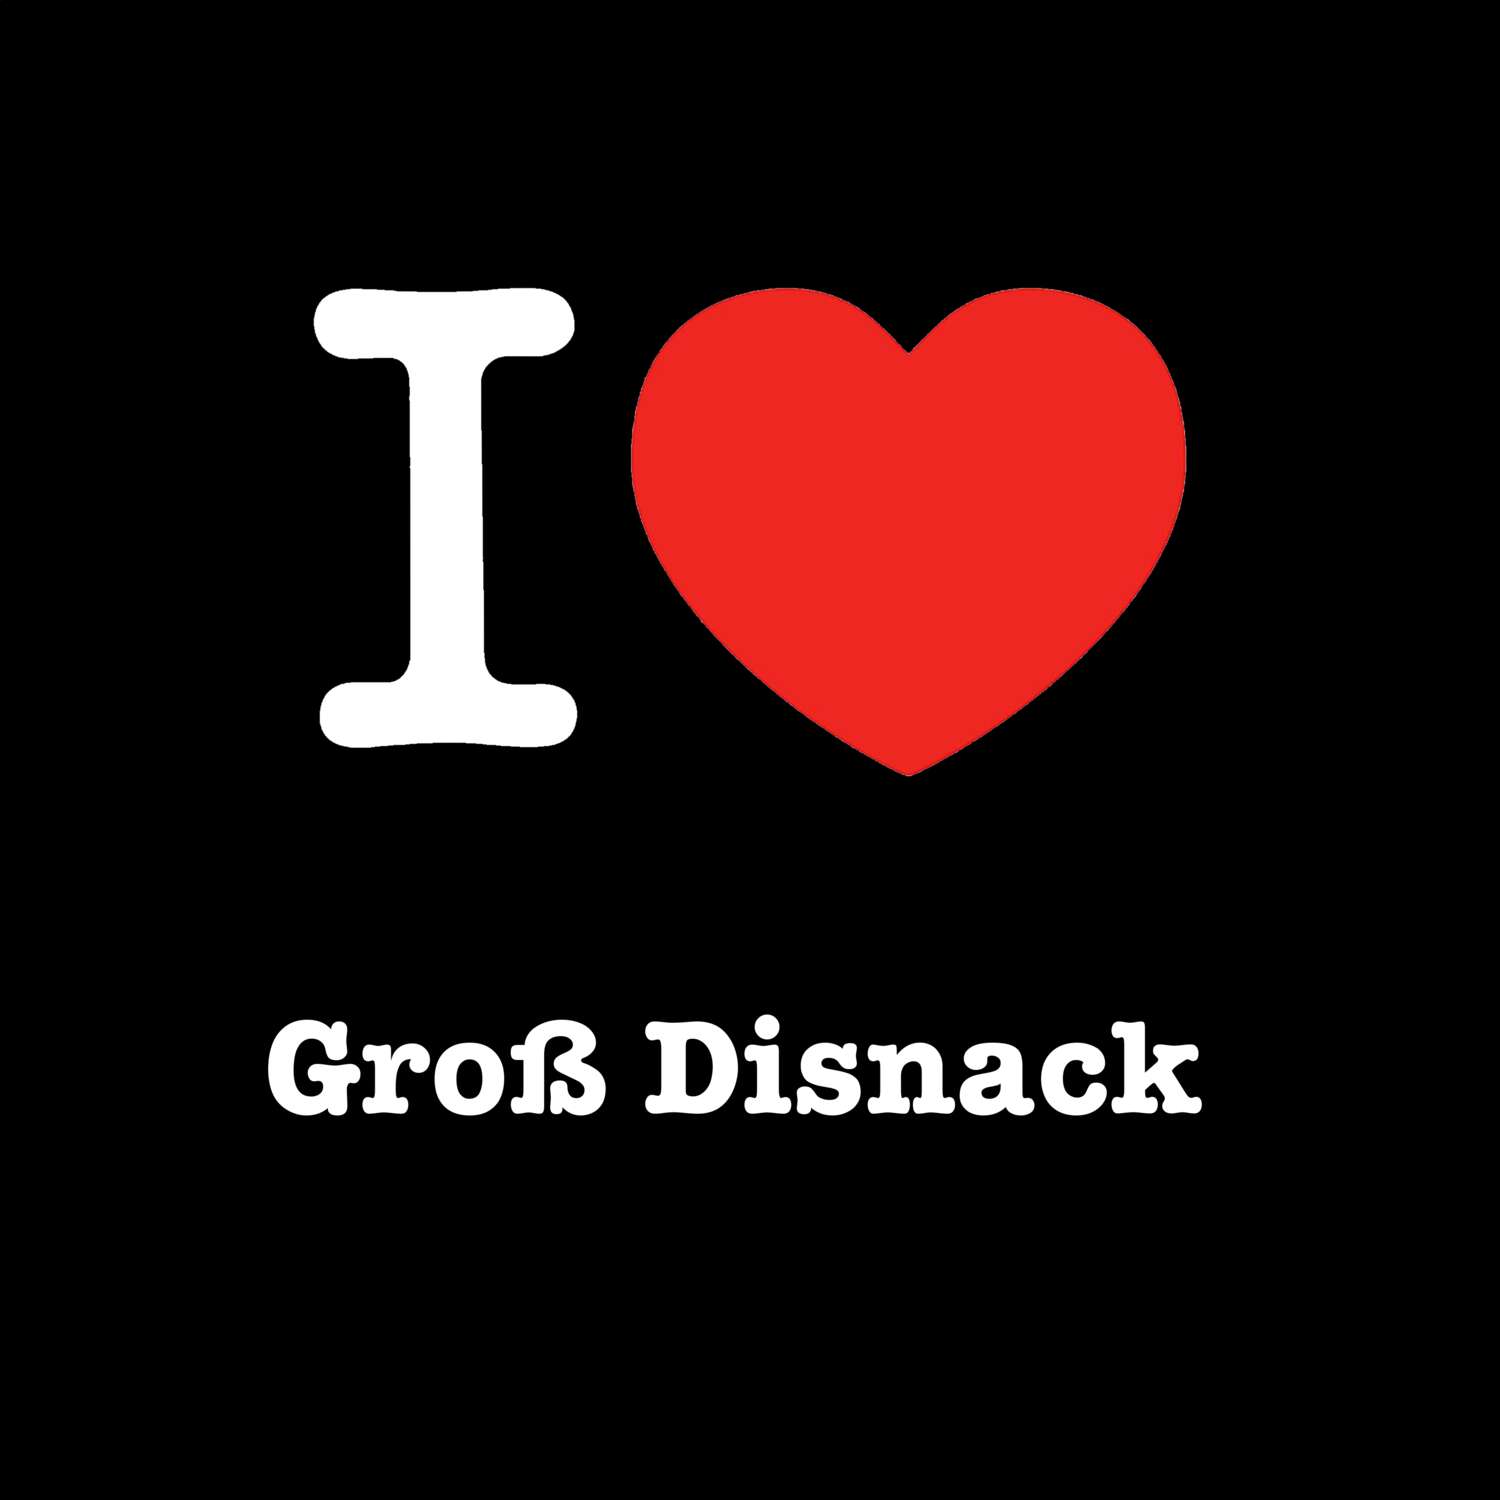 Groß Disnack T-Shirt »I love«